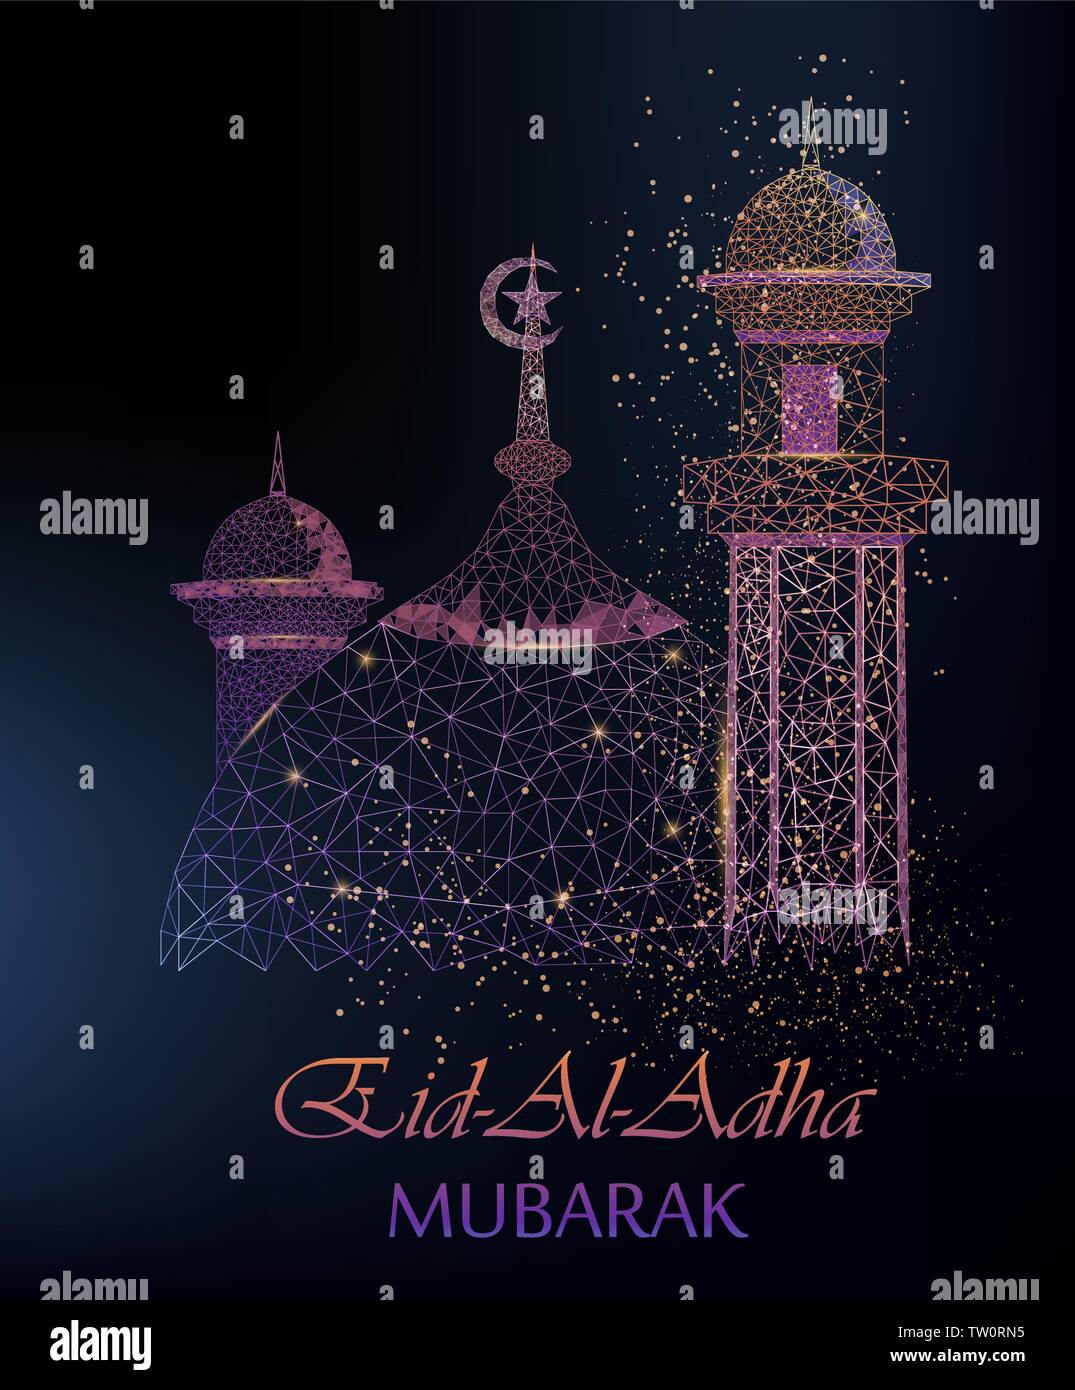 Eid al Adha Mubarak greeting card with polygonal mosque. Traditional Muslim holiday. Vector illustration on dark background Stock Vector